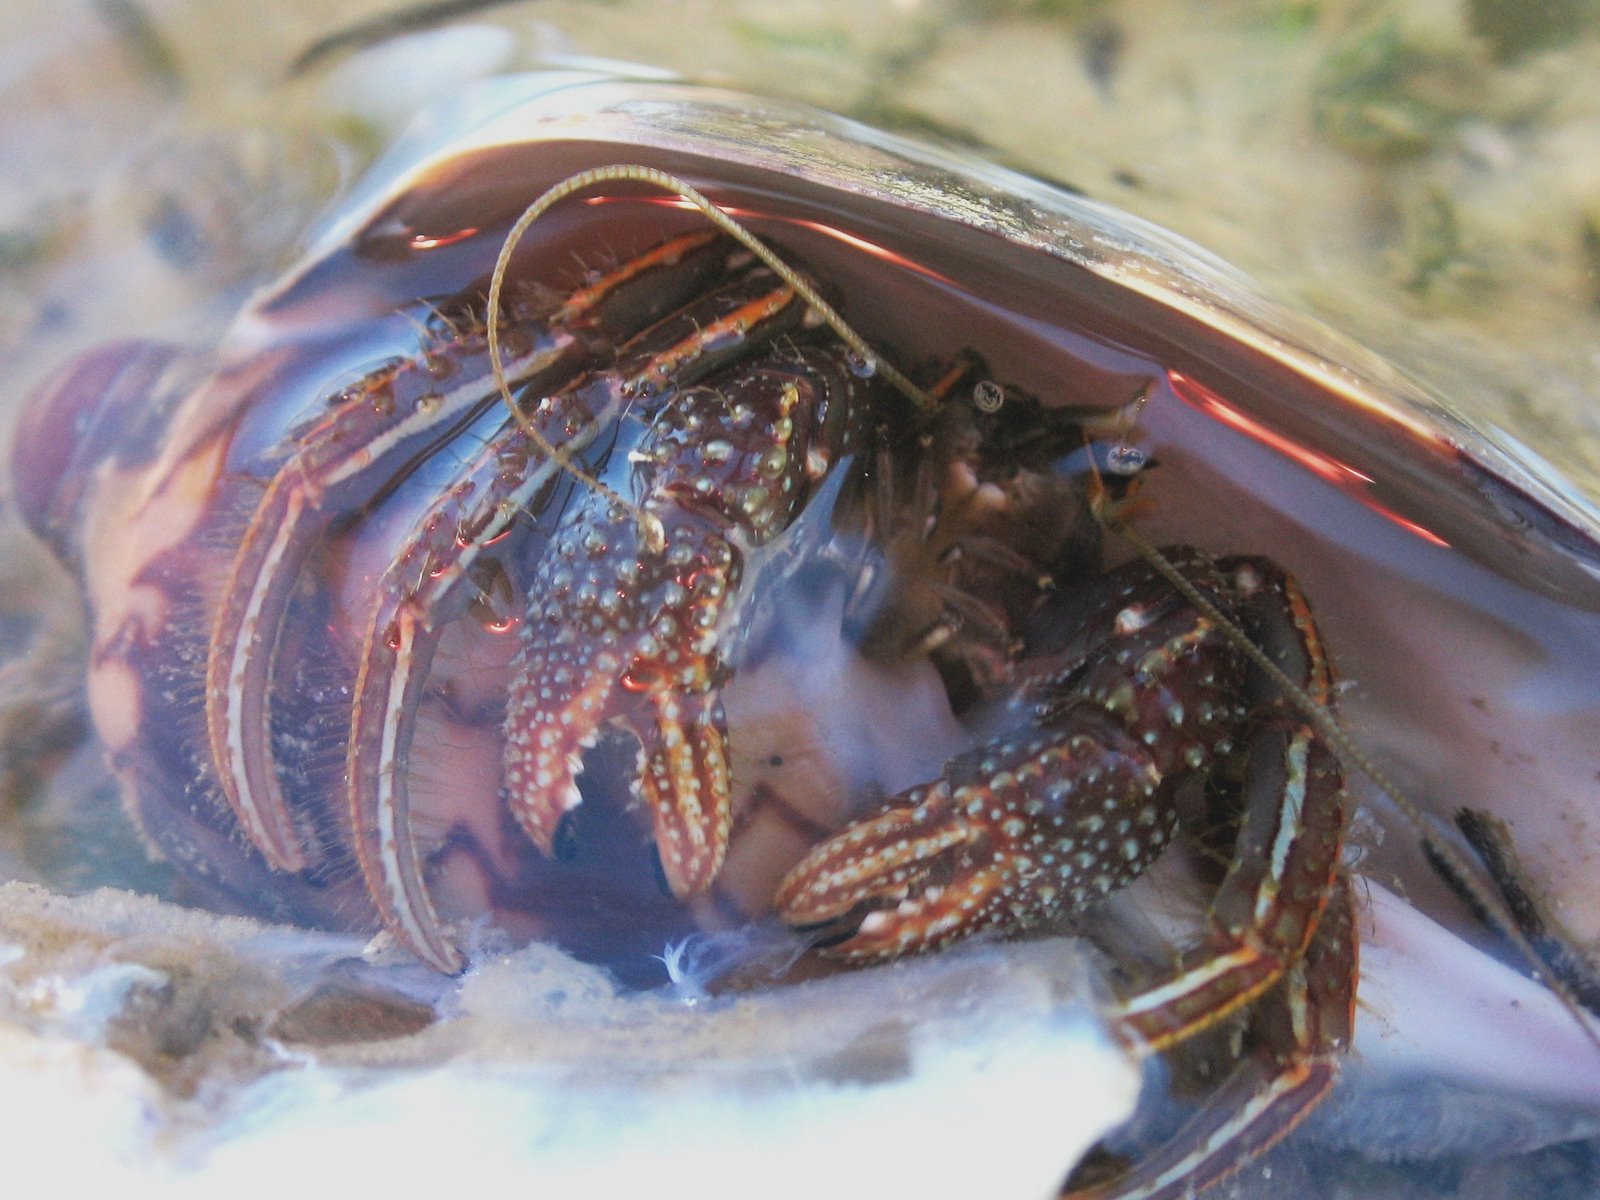 Stripped hermit crab